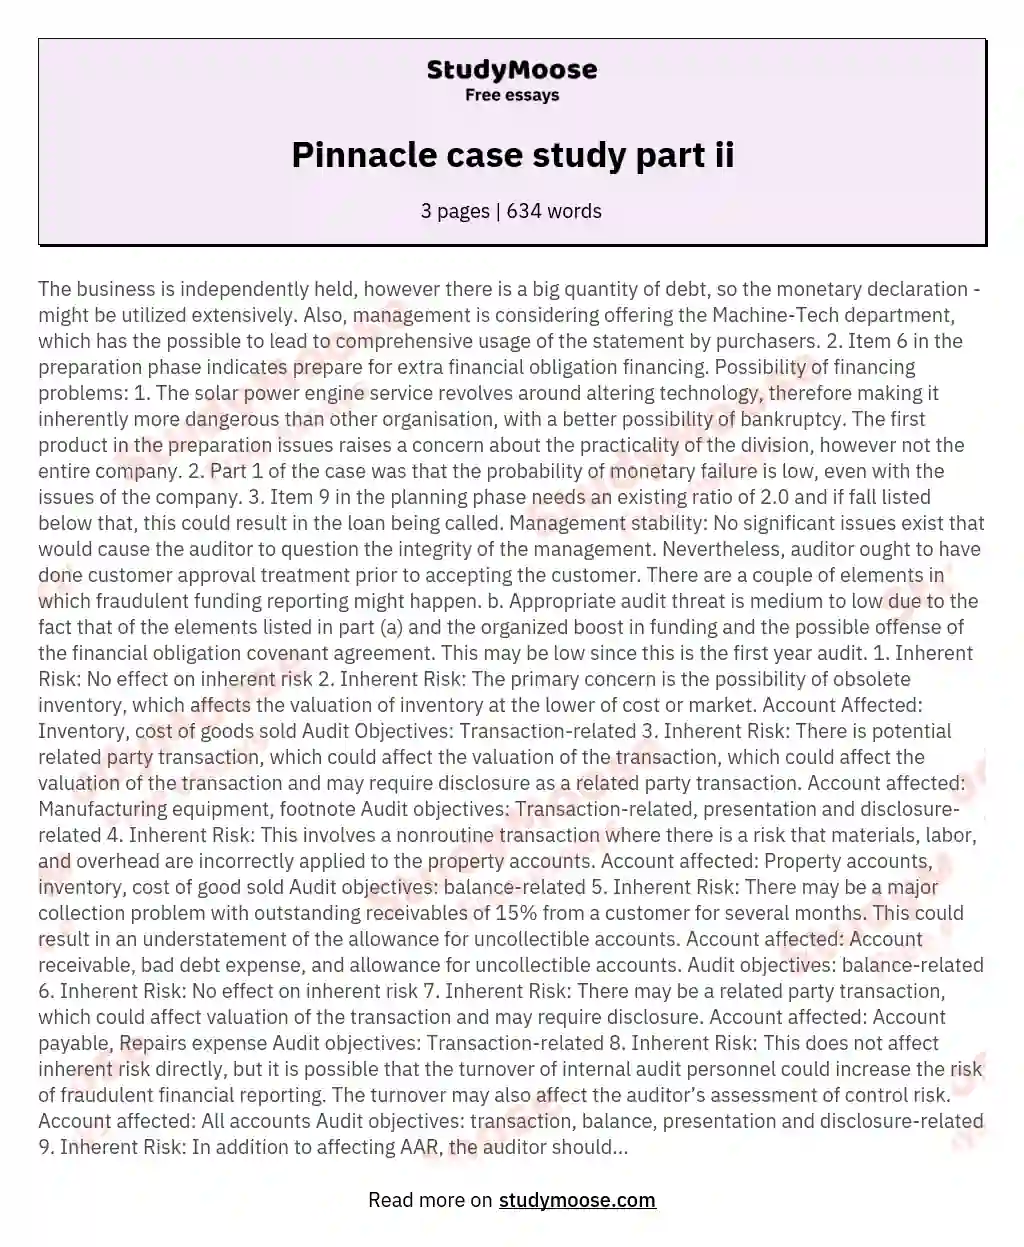 Pinnacle case study part ii essay